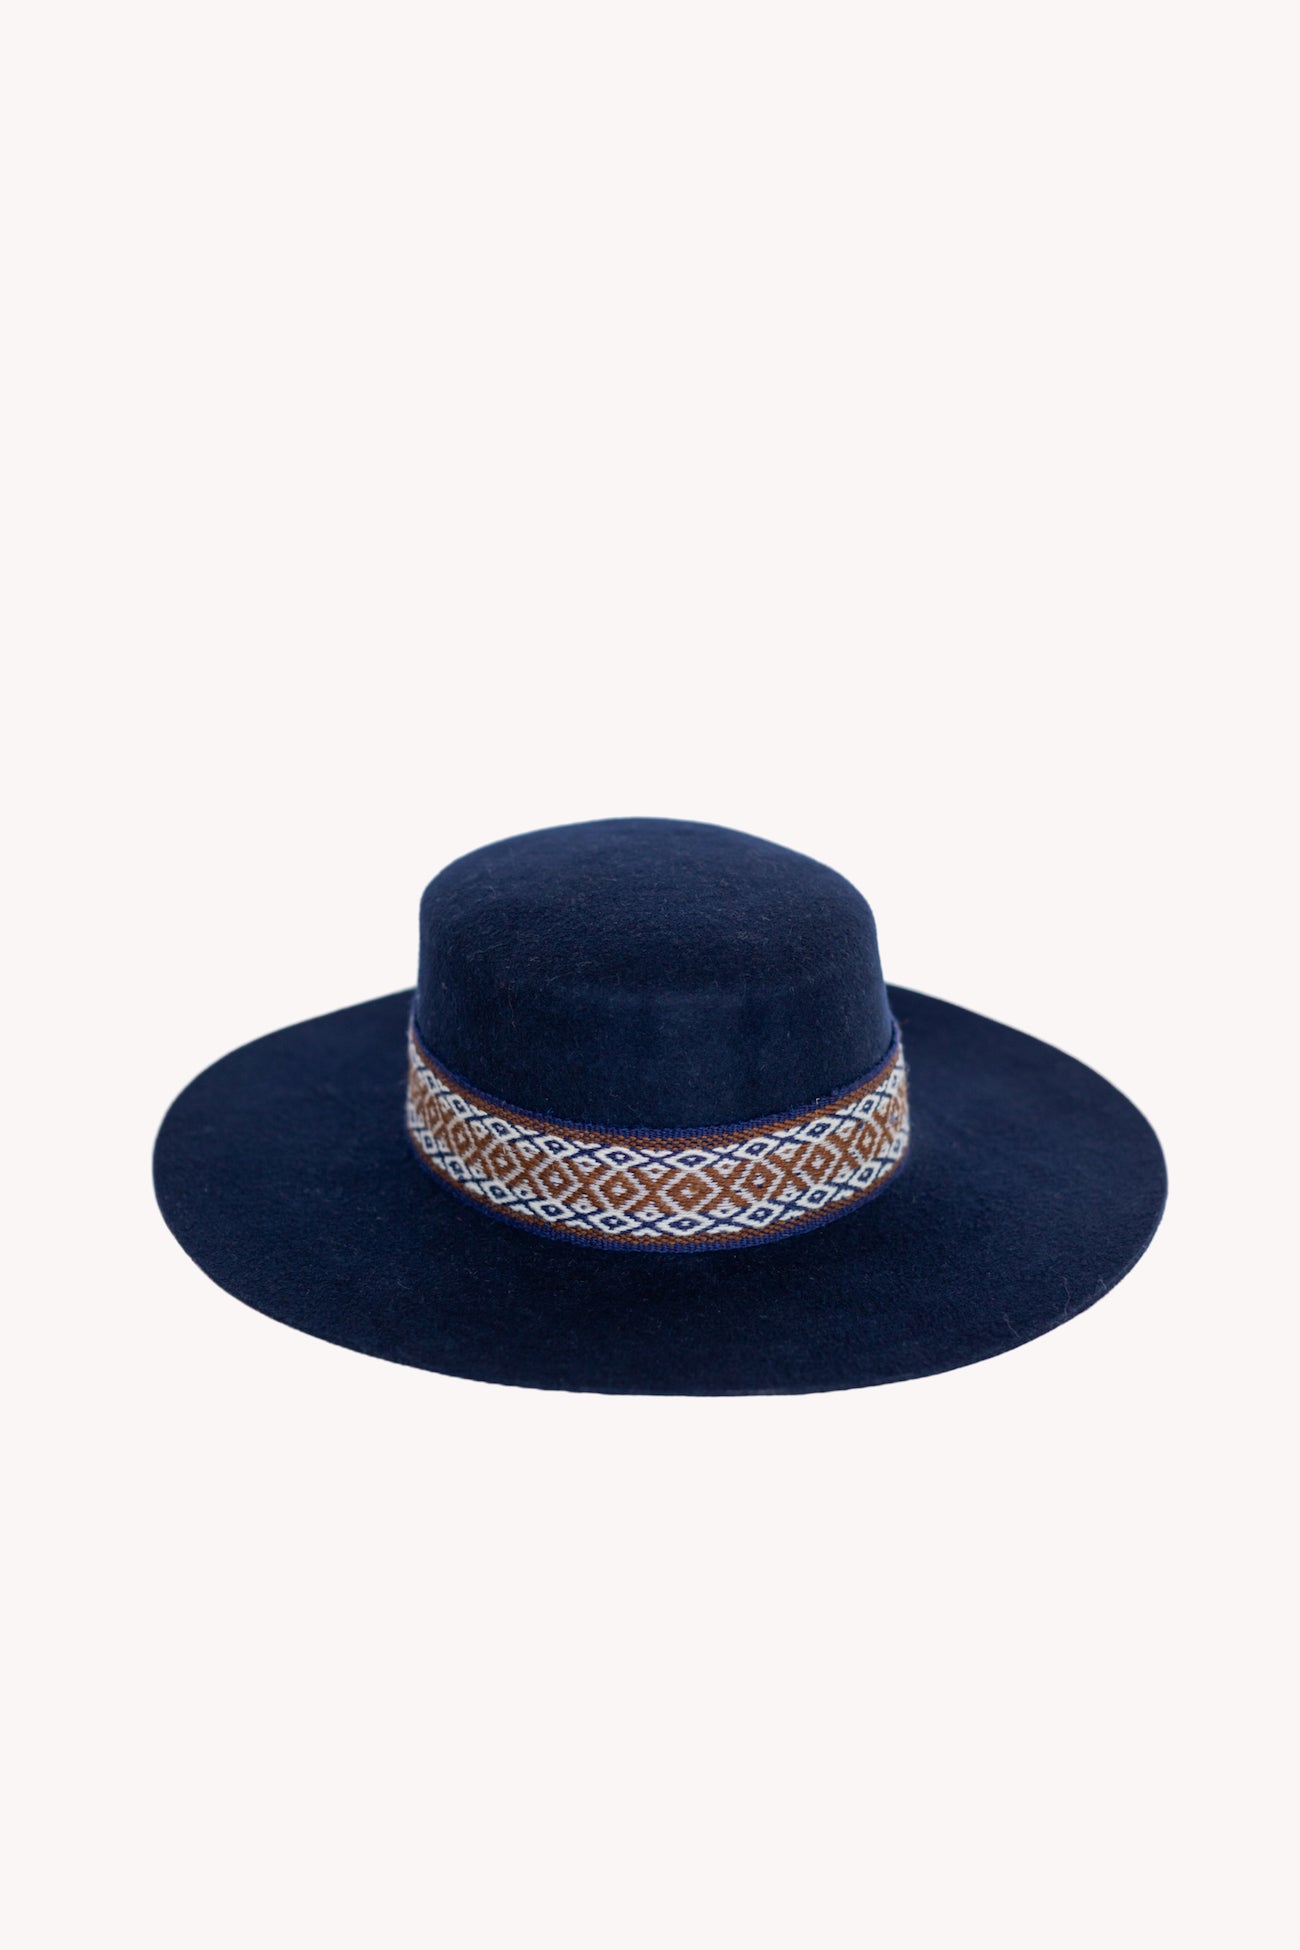 Blue Spanish style Peruvian hat